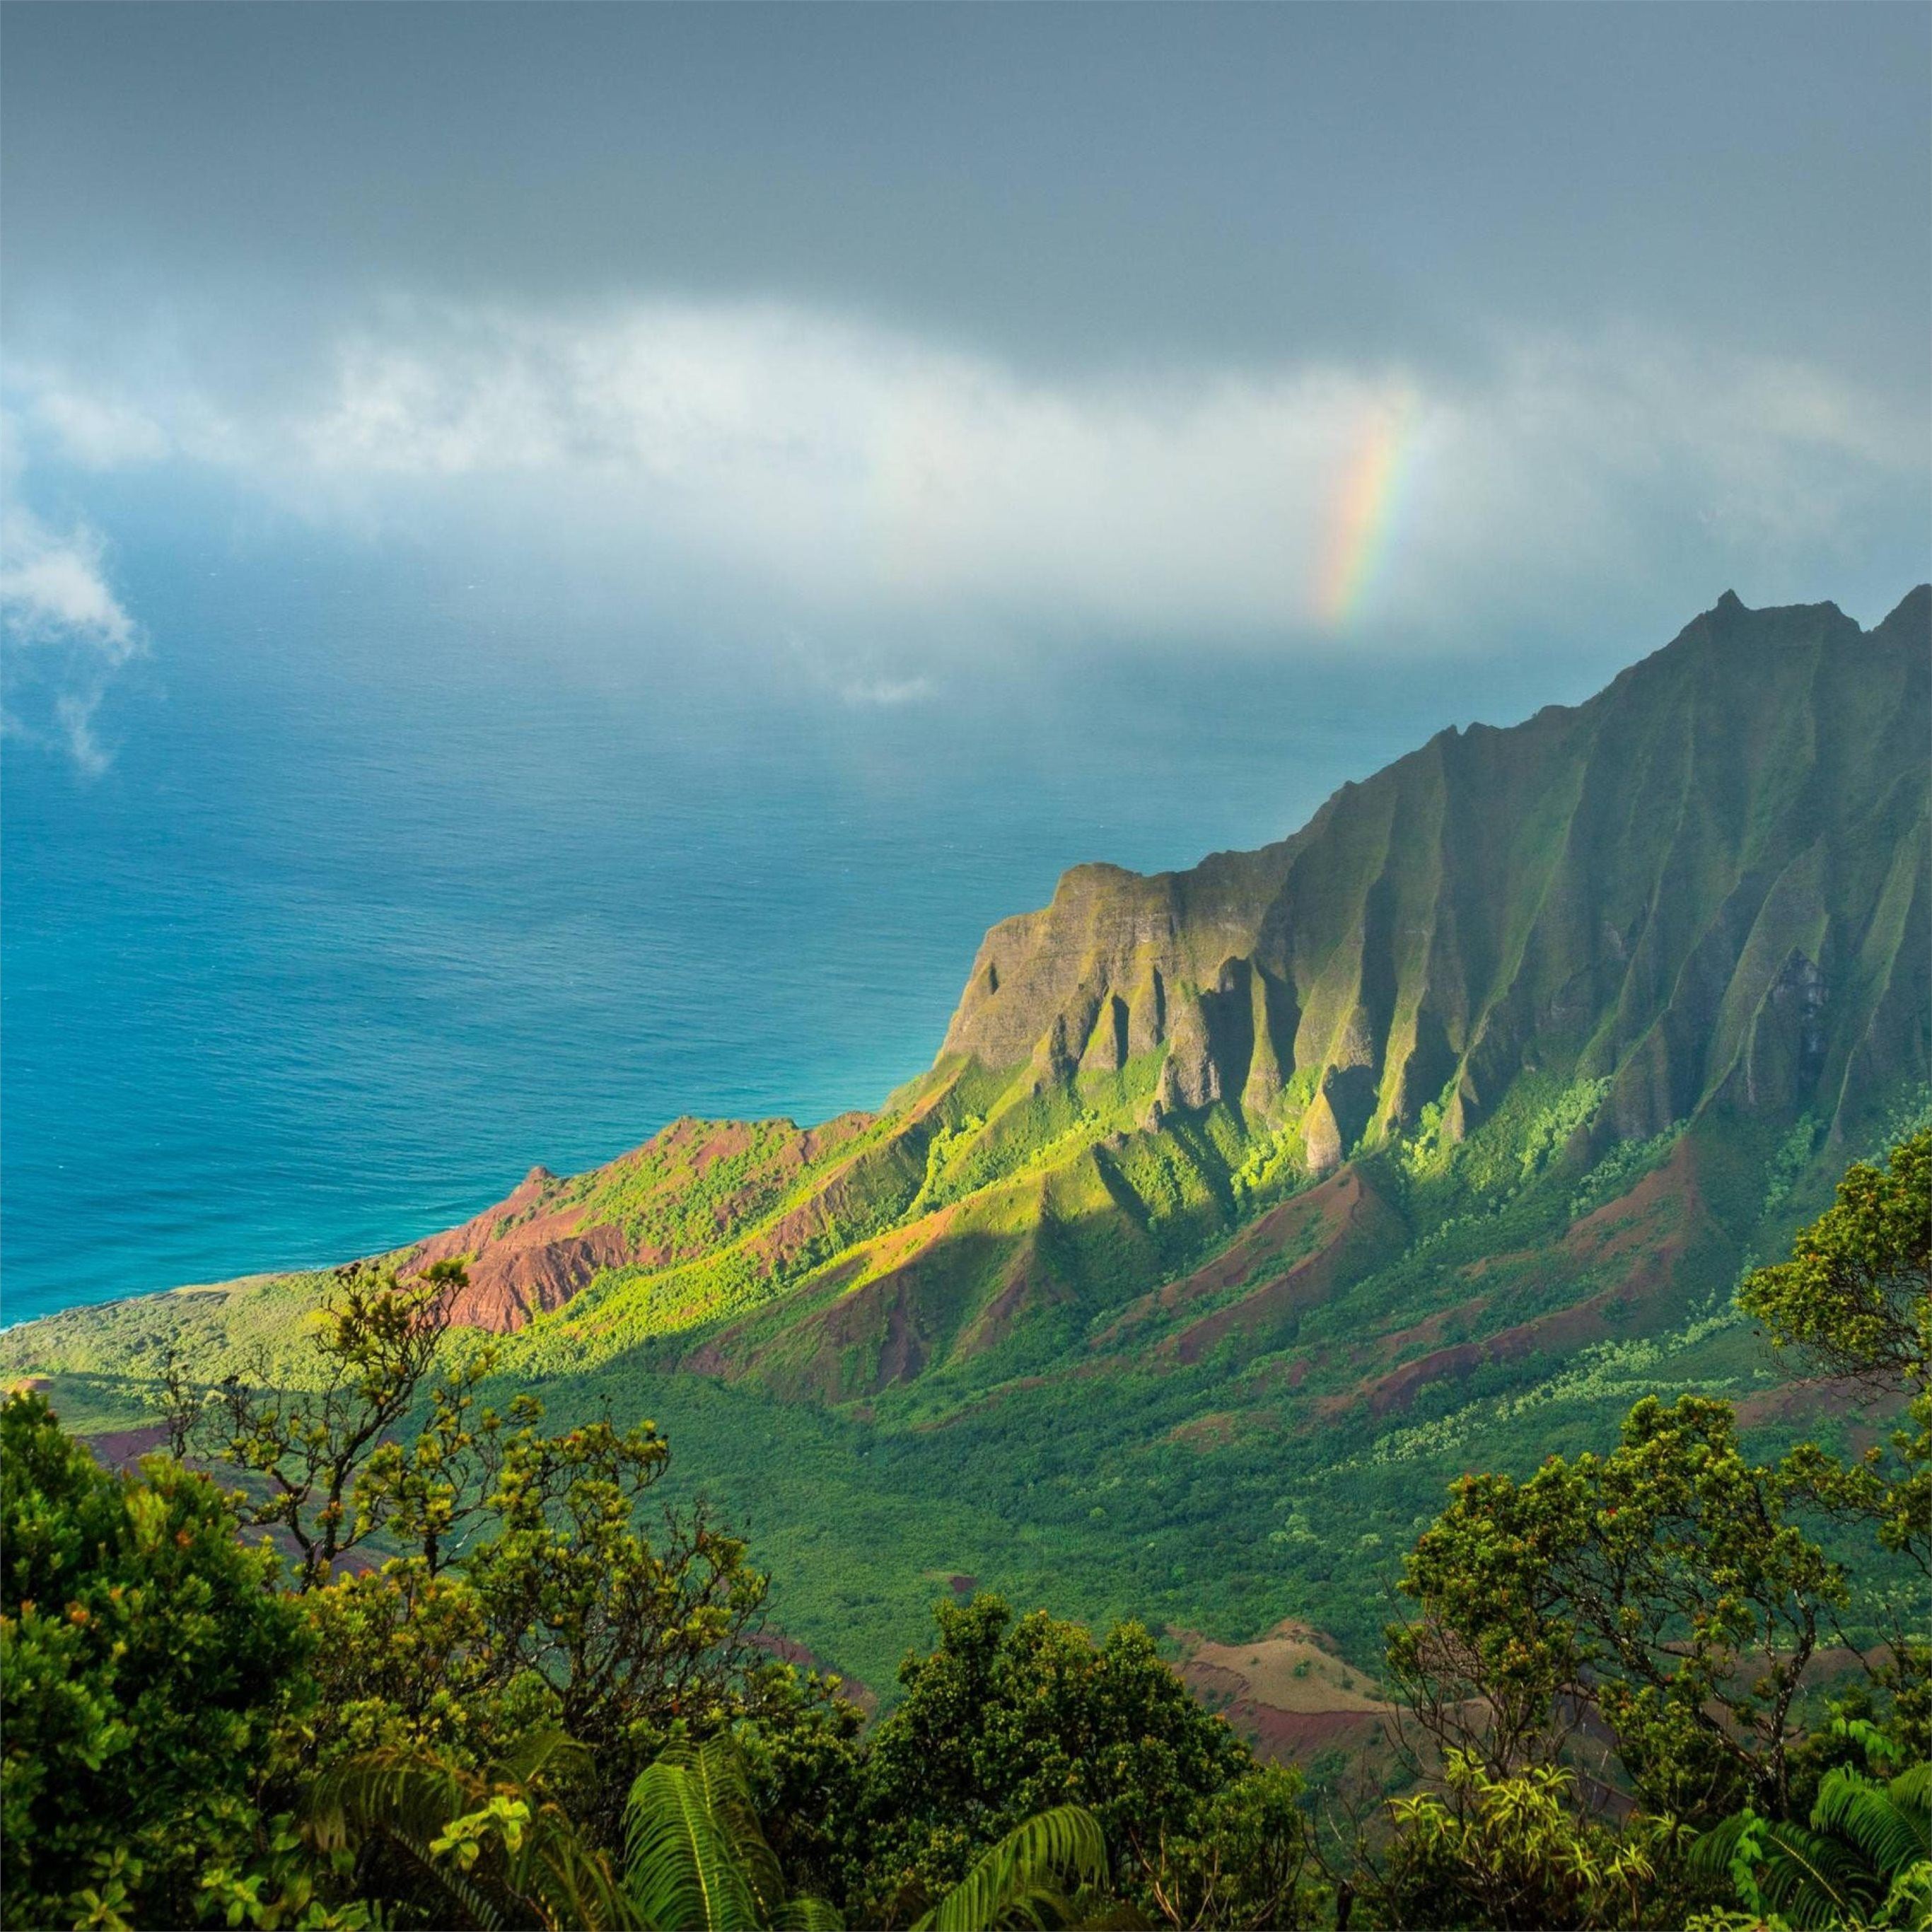 hawaii kauai pacific ocean clouds mountains 4k iPad Pro Wallpaper Free Download